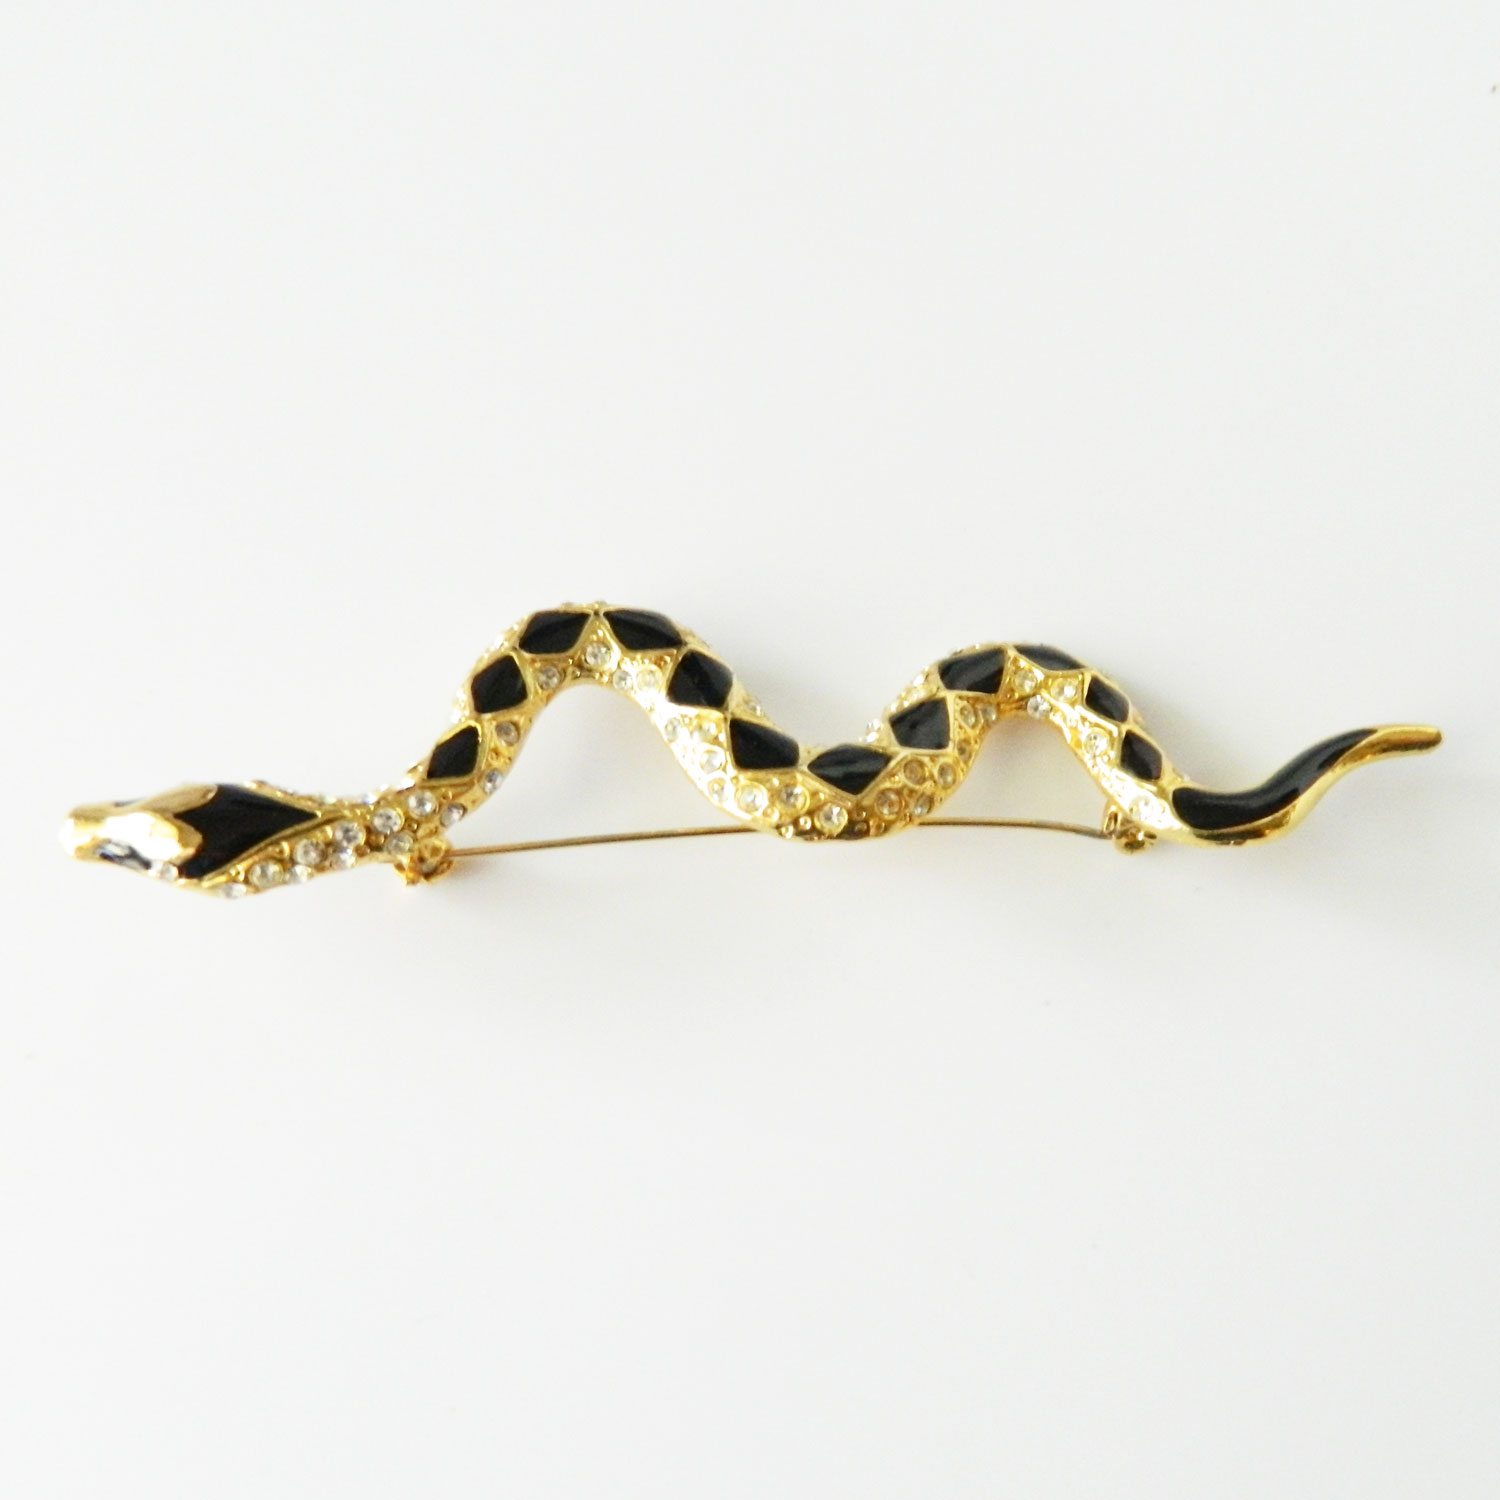 Rhinestone snake brooch